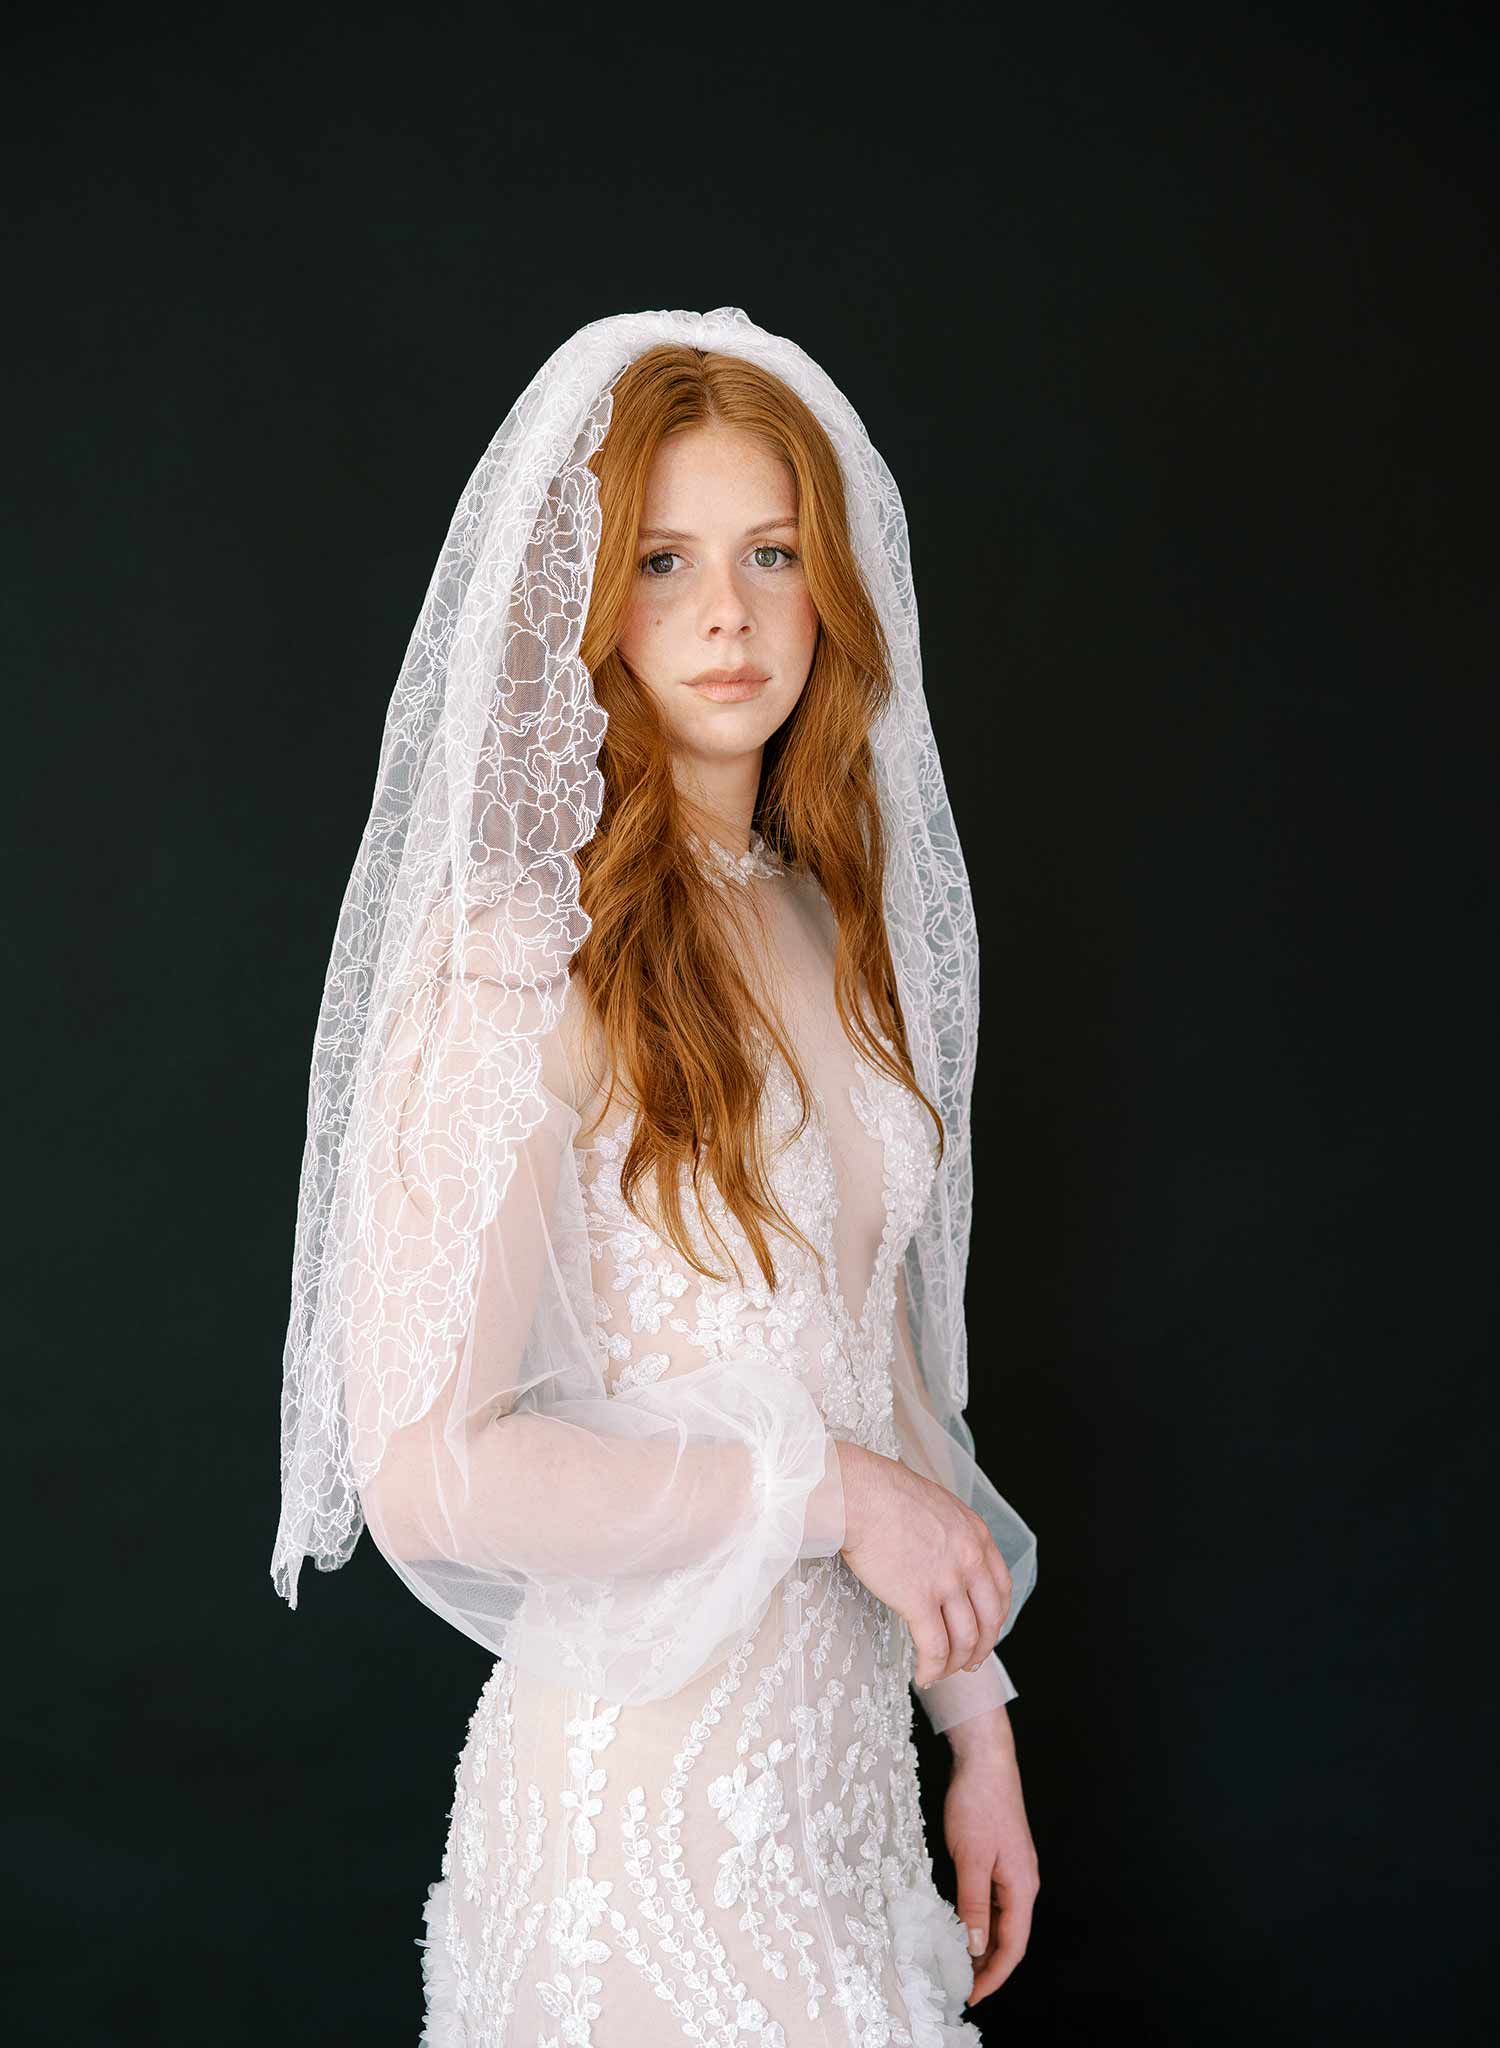 Cropped View Bride Underwear Veil Putting Lace Wedding Dress